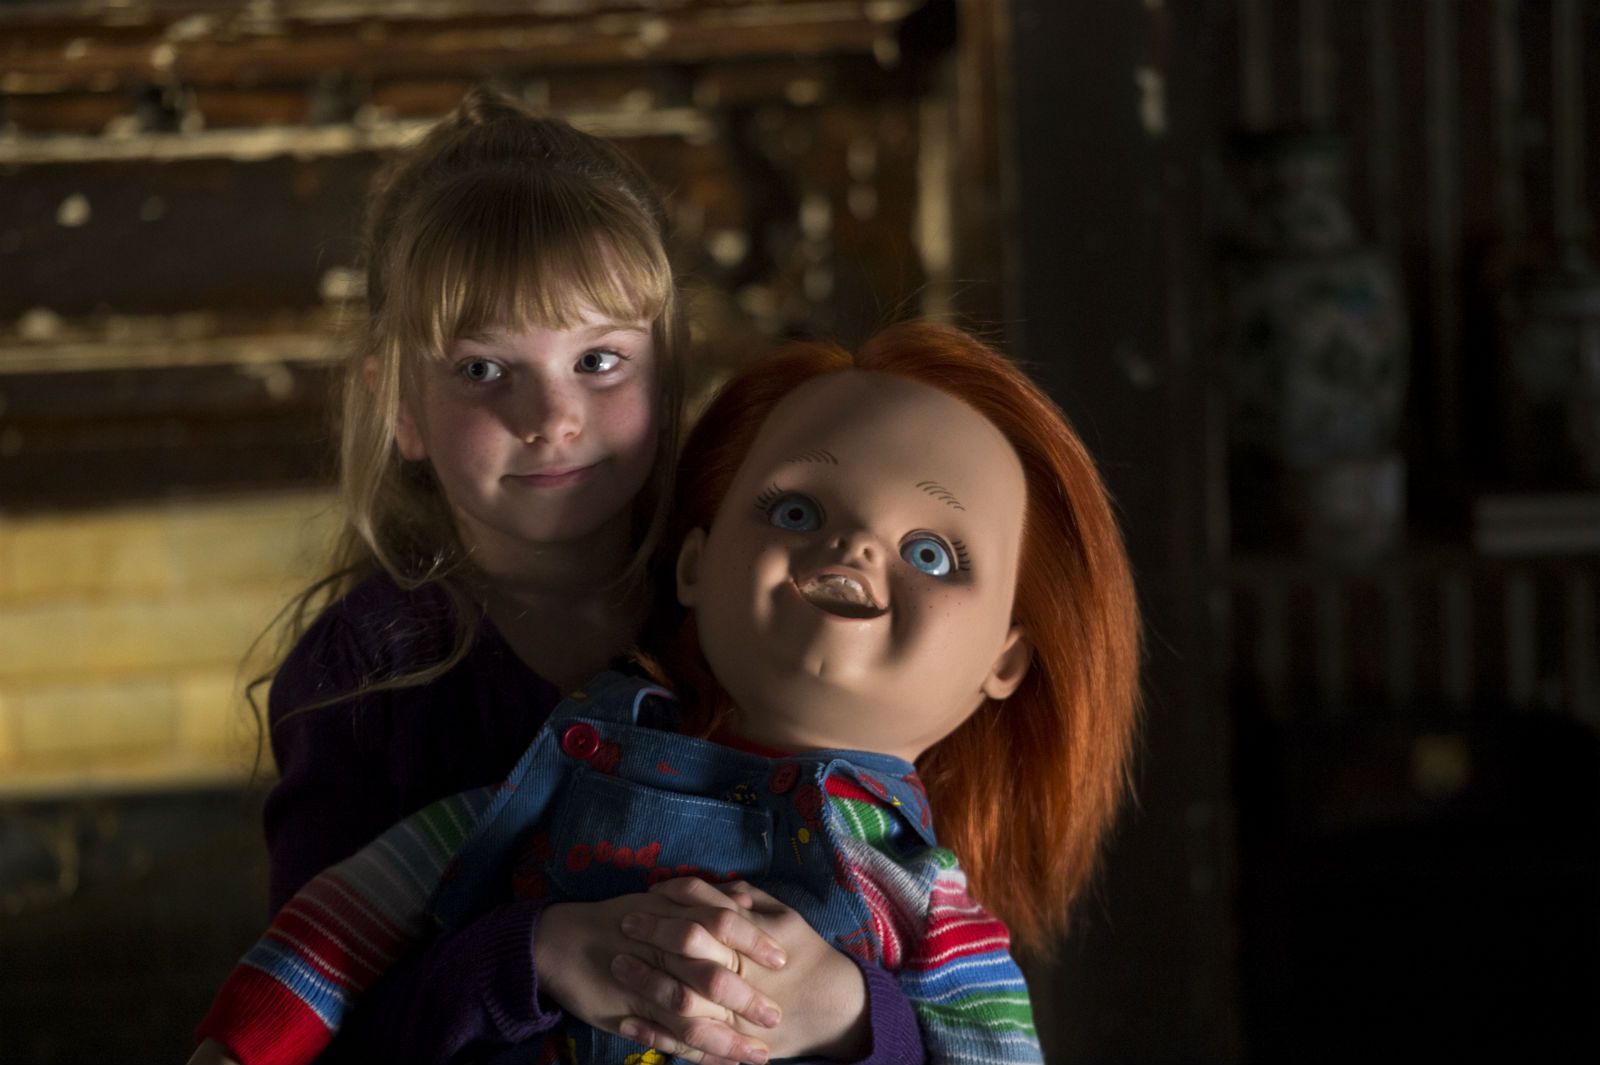 Two Curse Of Chucky Photos Introduce Summer H Howell As Alice